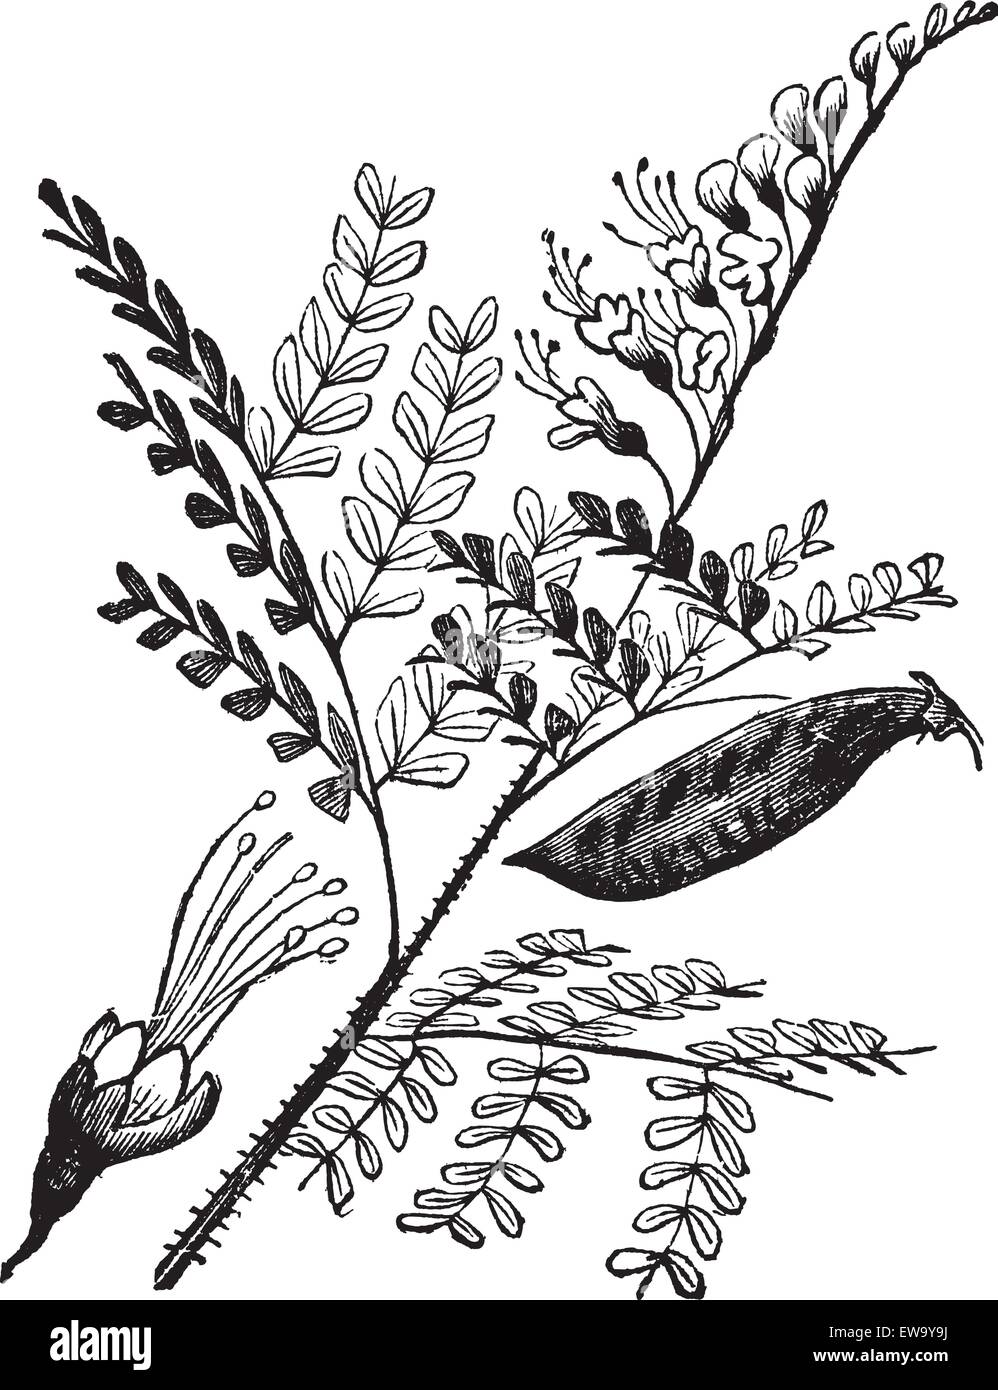 Caesalpinia echinata, palo brasil, Pau-brasil, Pau de Pernambuco o Ibirapitanga vintage grabado. Ilustración de grabados antiguos Ilustración del Vector